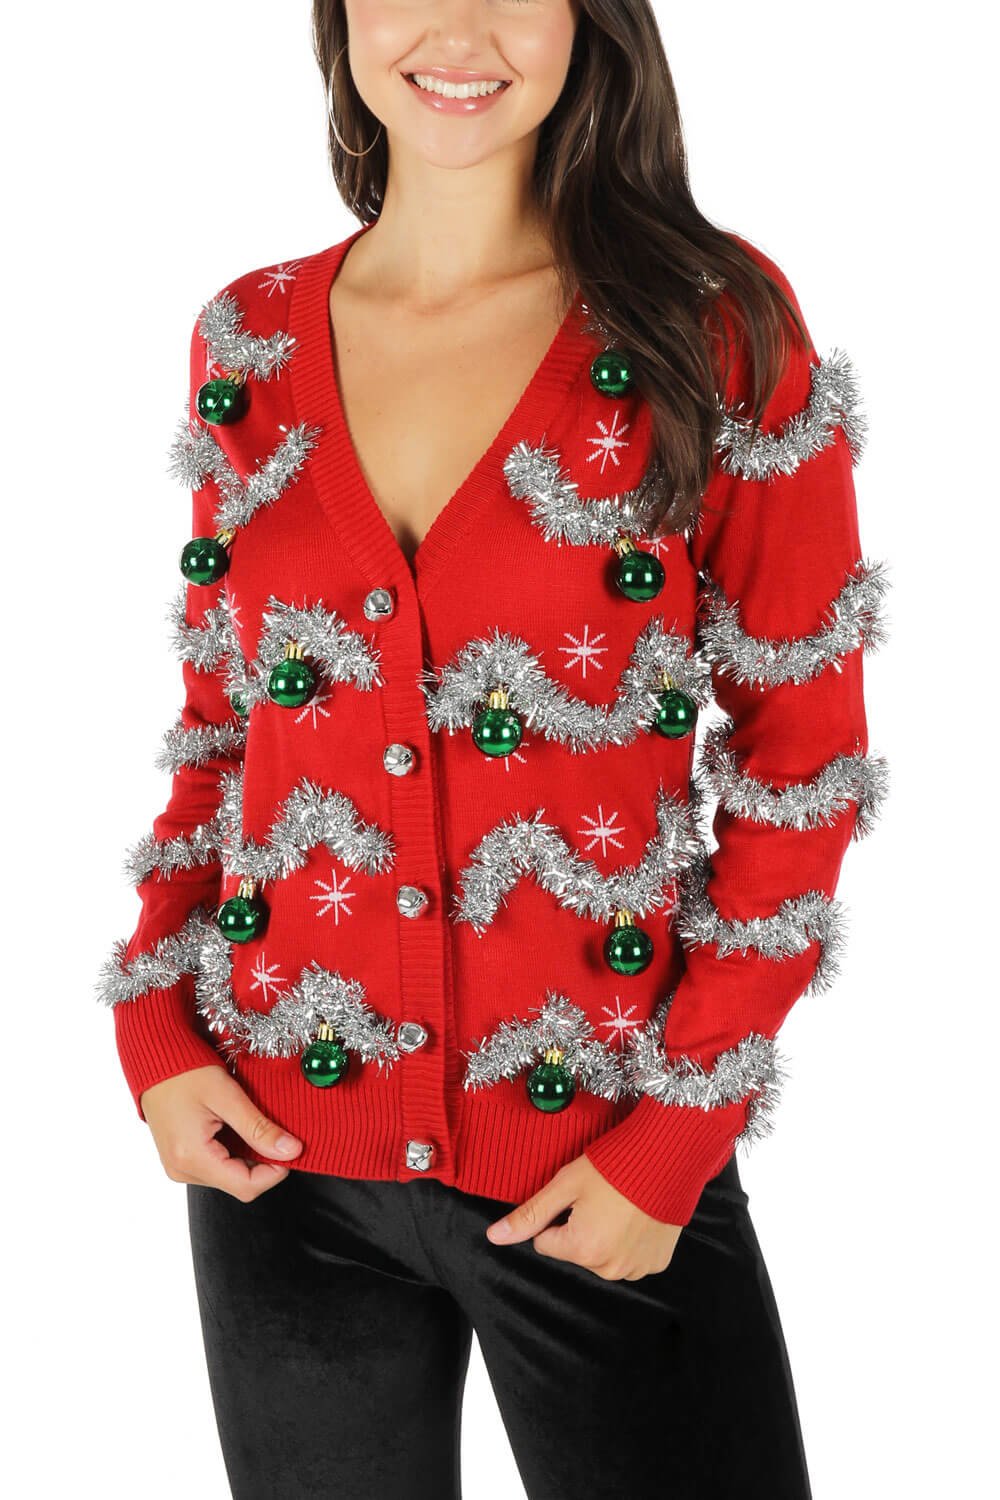 Tipsy Elves Women's Tinsel Christmas Sweater